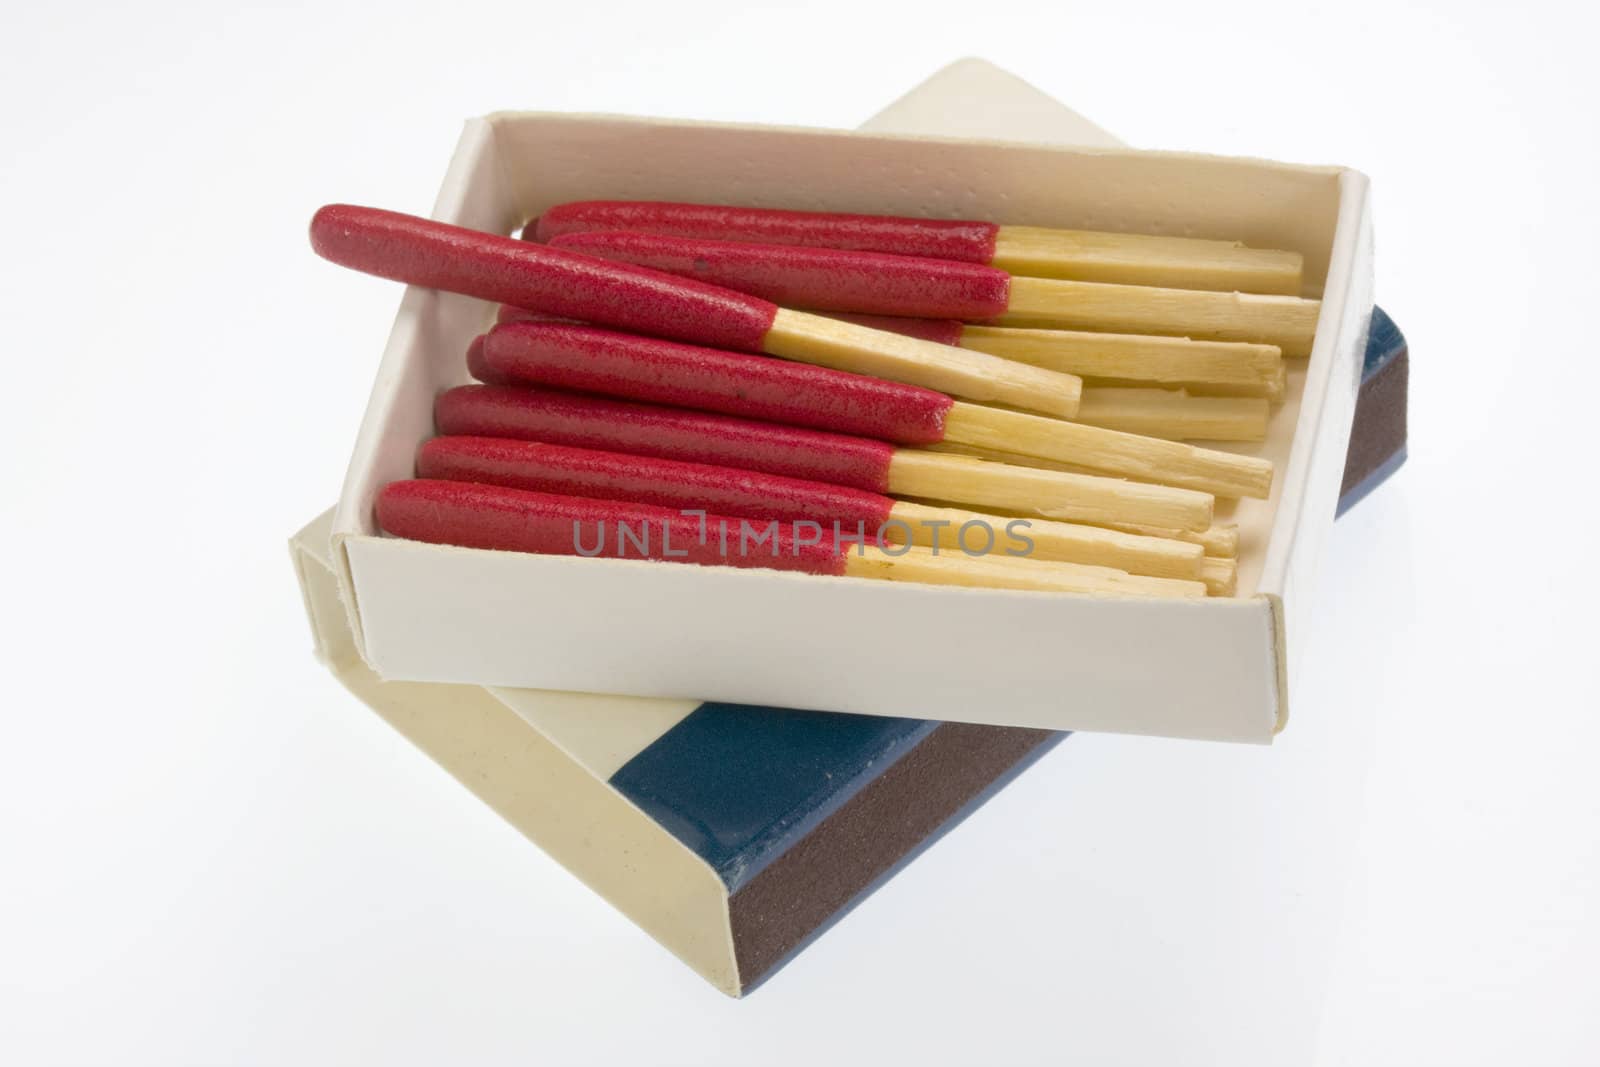 open box of waterproof matches by PixelsAway